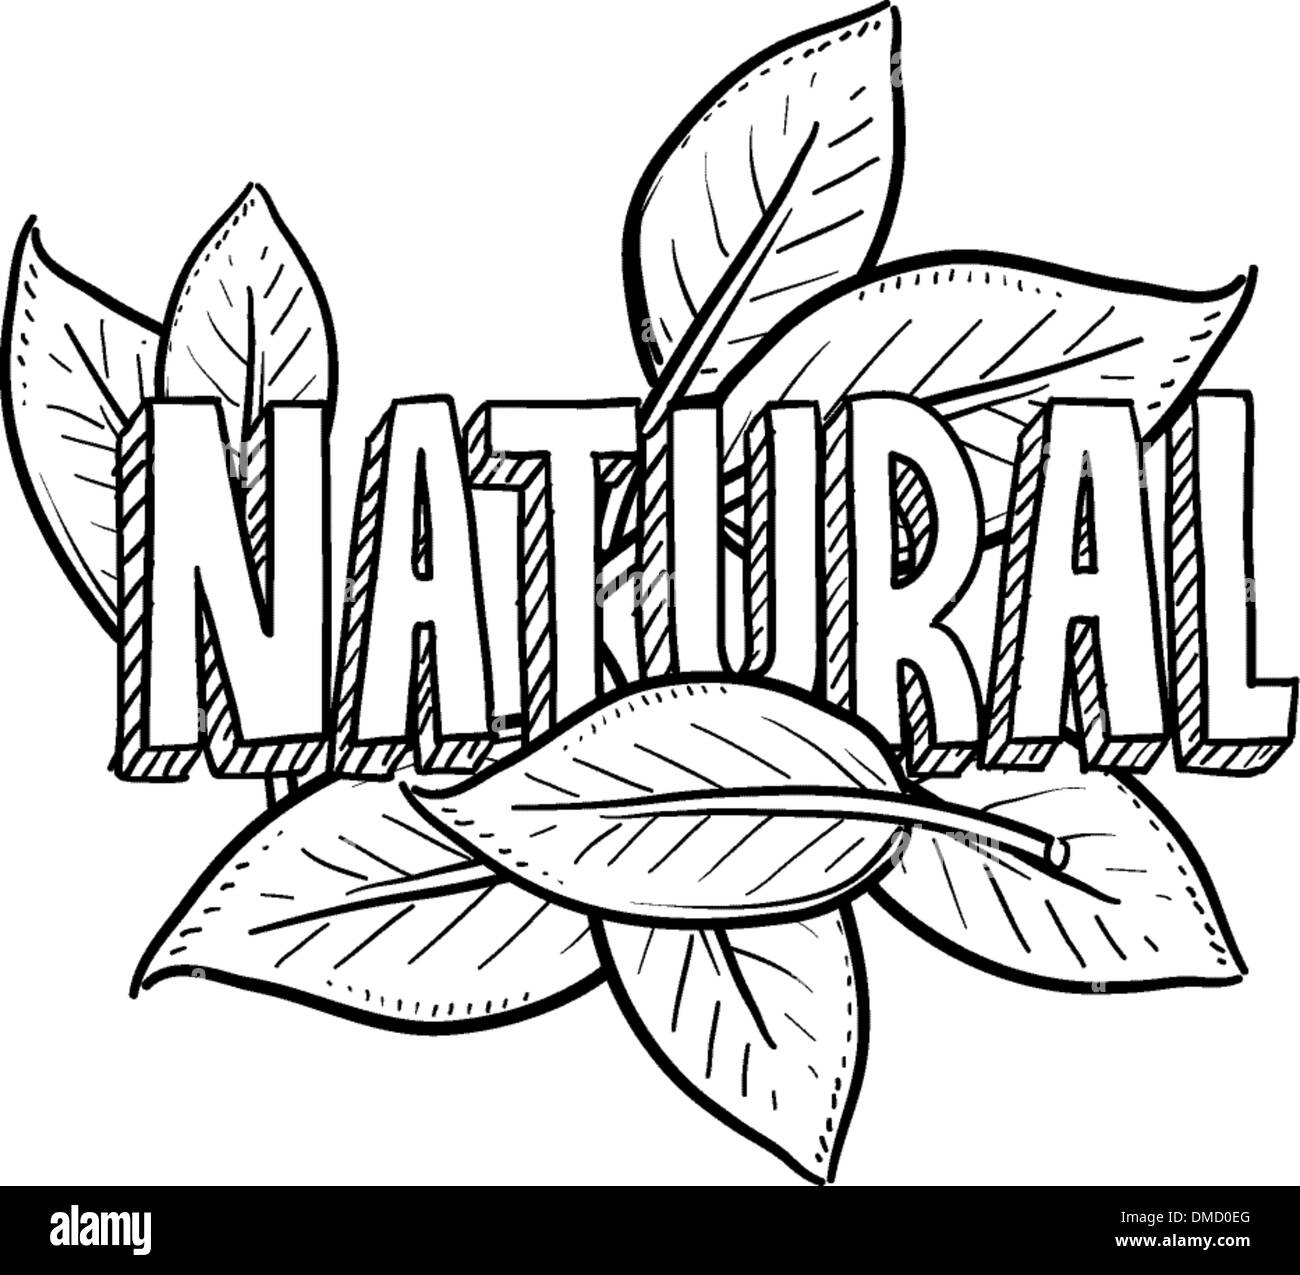 Natural food sketch Stock Vector